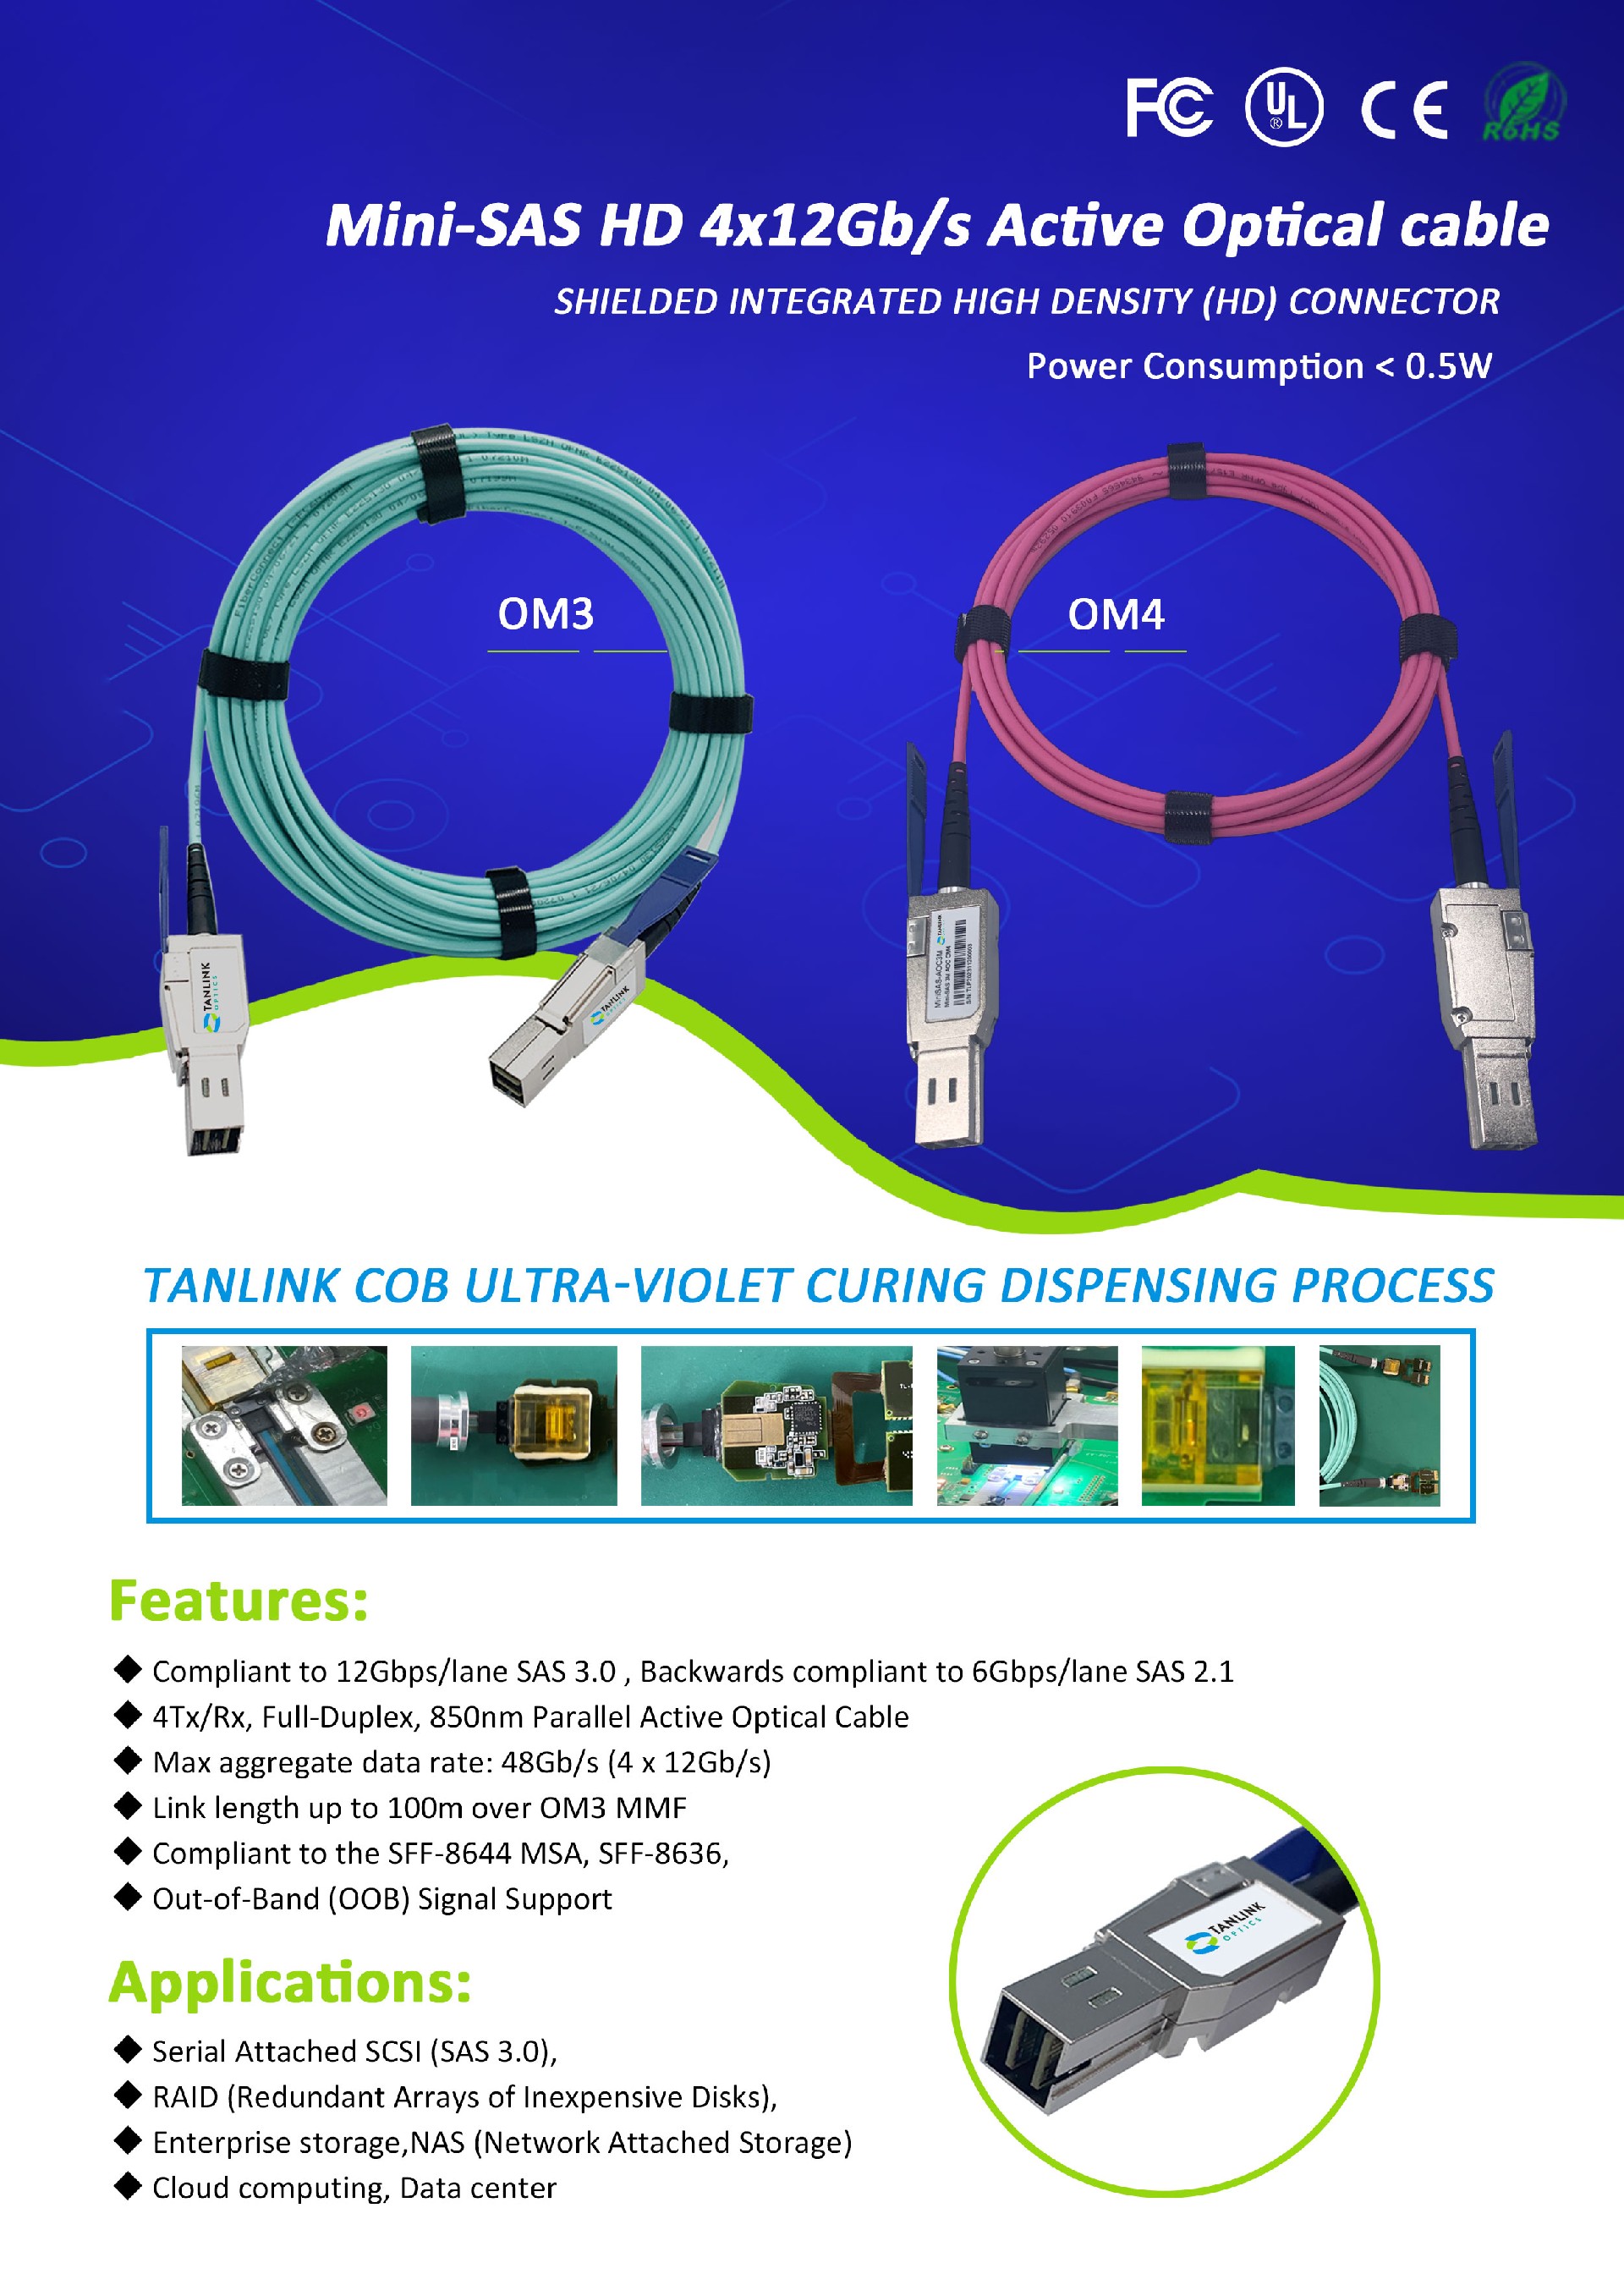 Mini-SAS HD 4x12Gb/s Active Optical cable